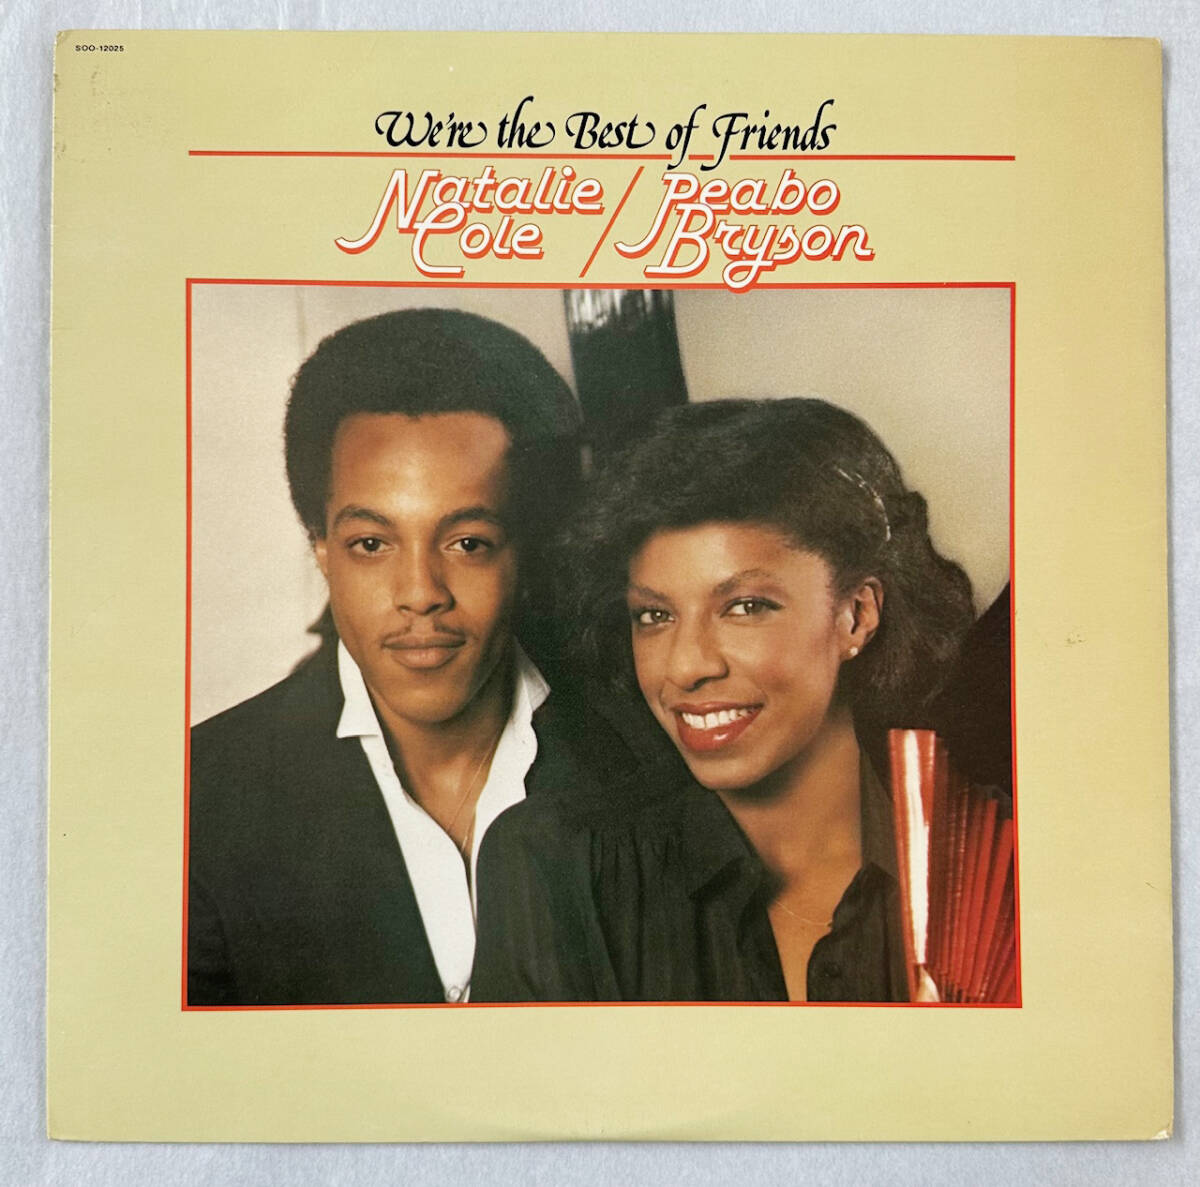 #1979 год оригинал US запись Natalie Cole & Peabo Bryson - We*re The Best Of Friends 12~LP SOO-12025 Capitol